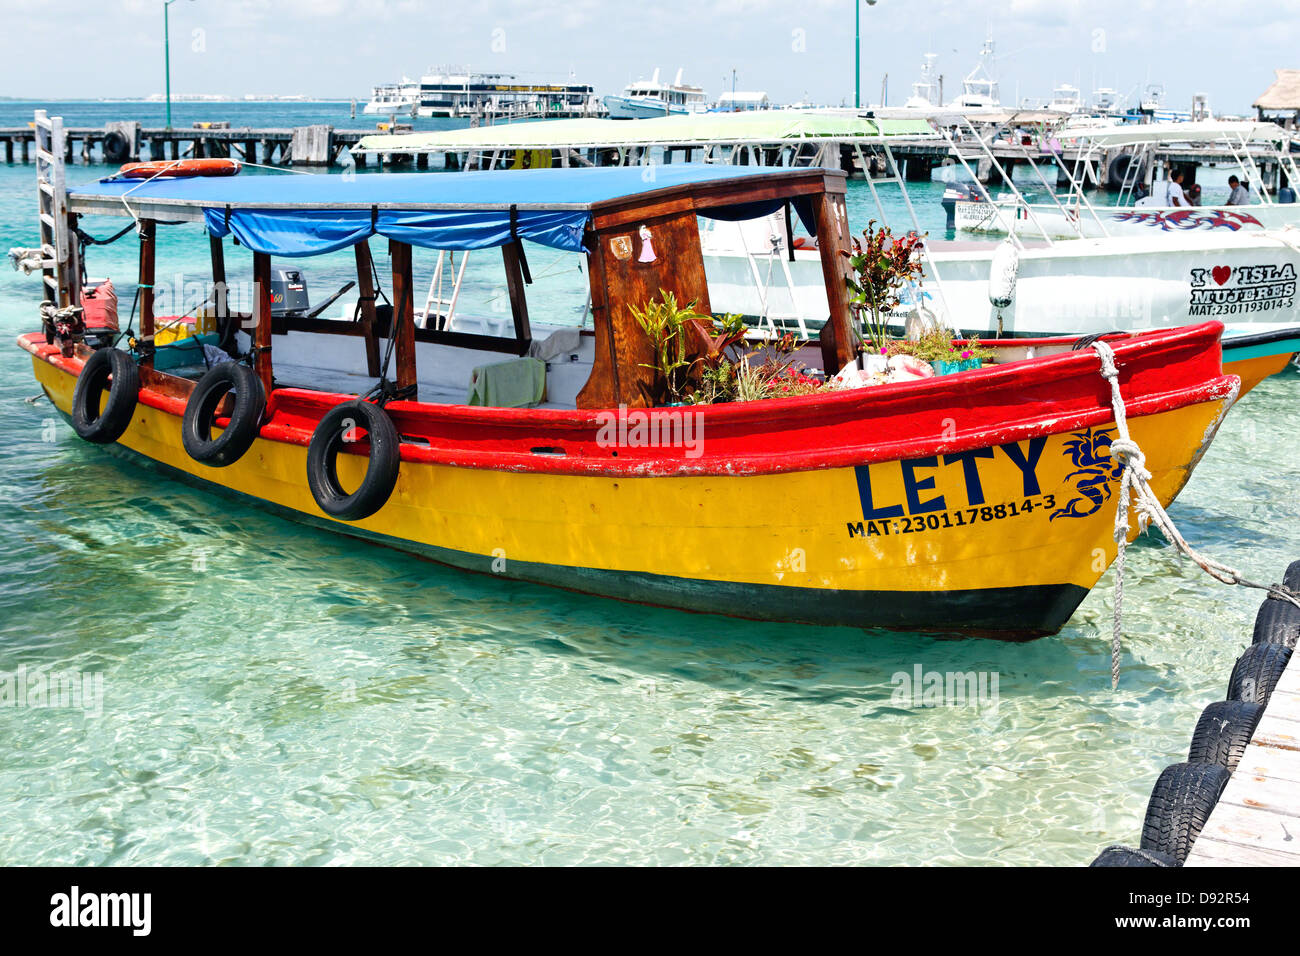 Colorfool Boat at a Pier, Isla Mujeres, Quintana Roo, Mexico Stock Photo